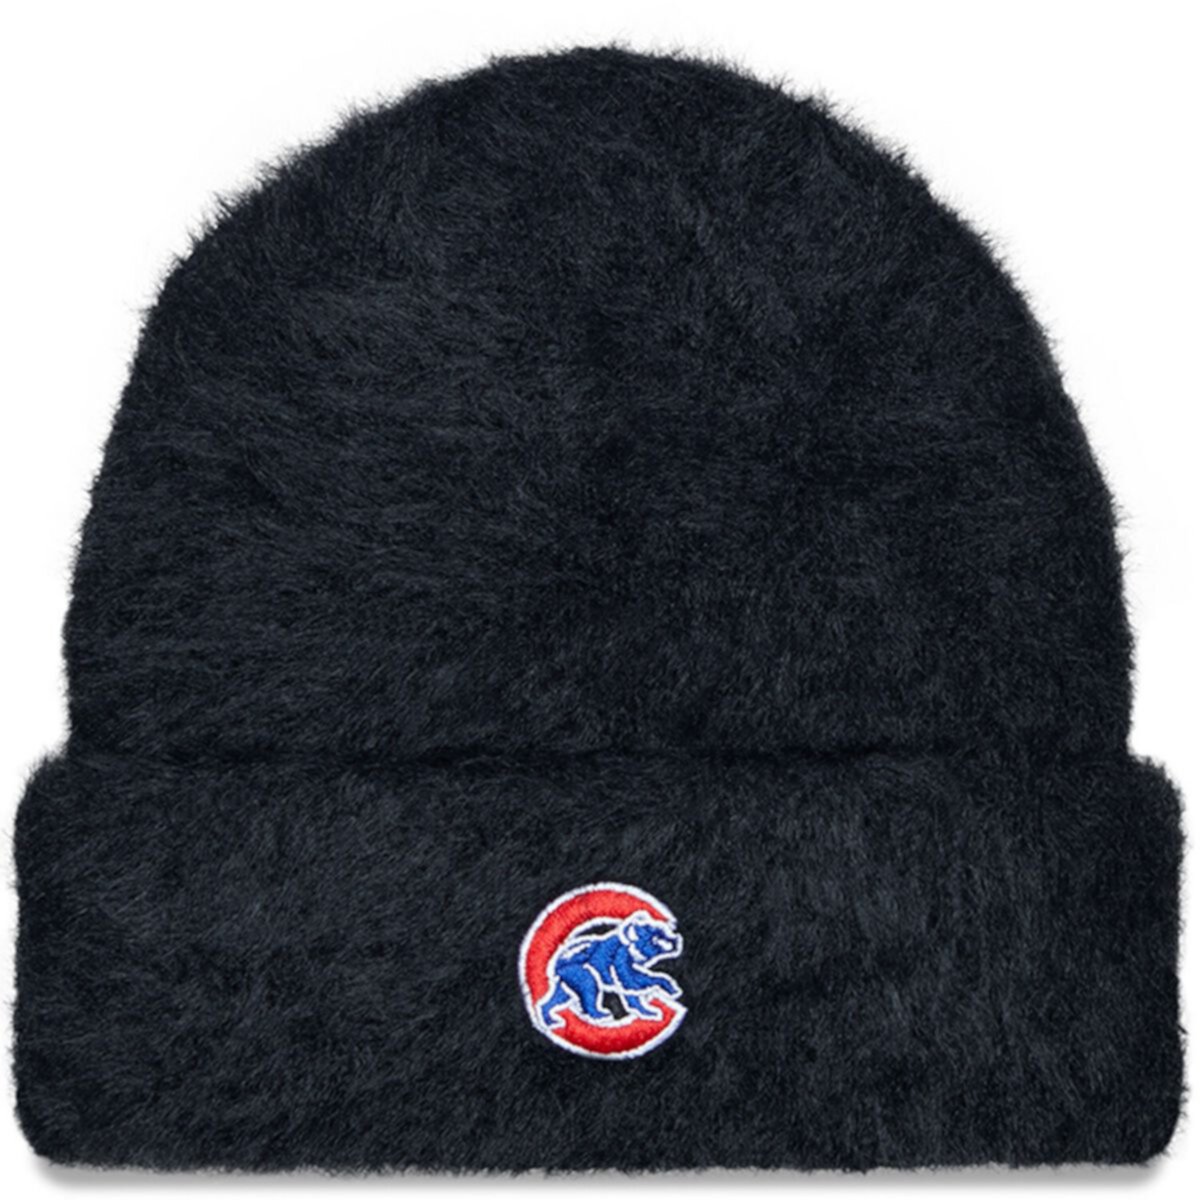 Women's New Era Black Chicago Cubs Fuzzy Cuffed Knit Hat New Era